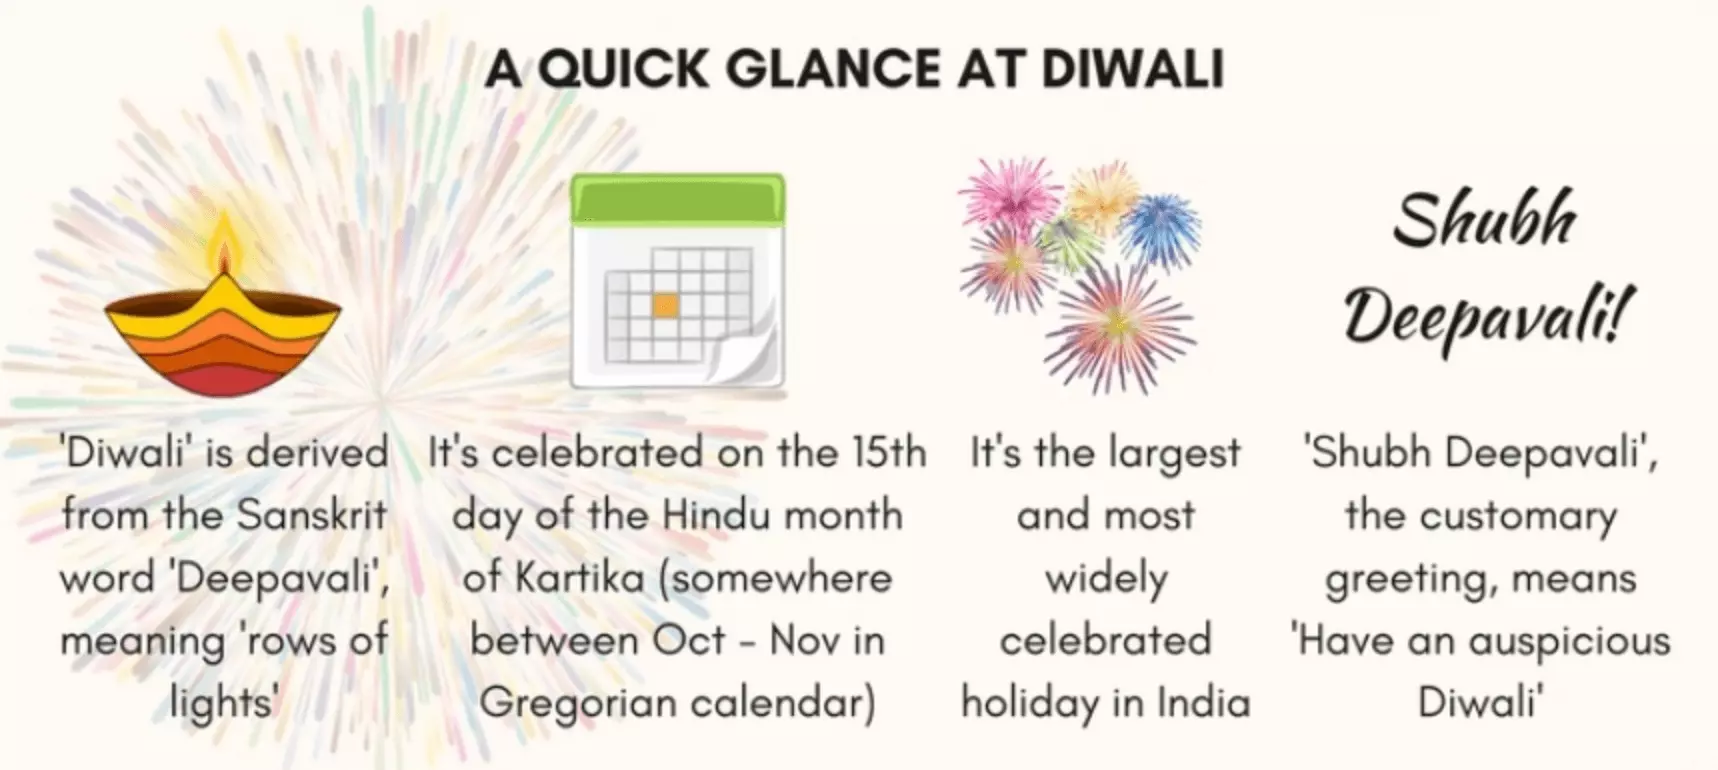 Quick_Glance_At_Diwali.png